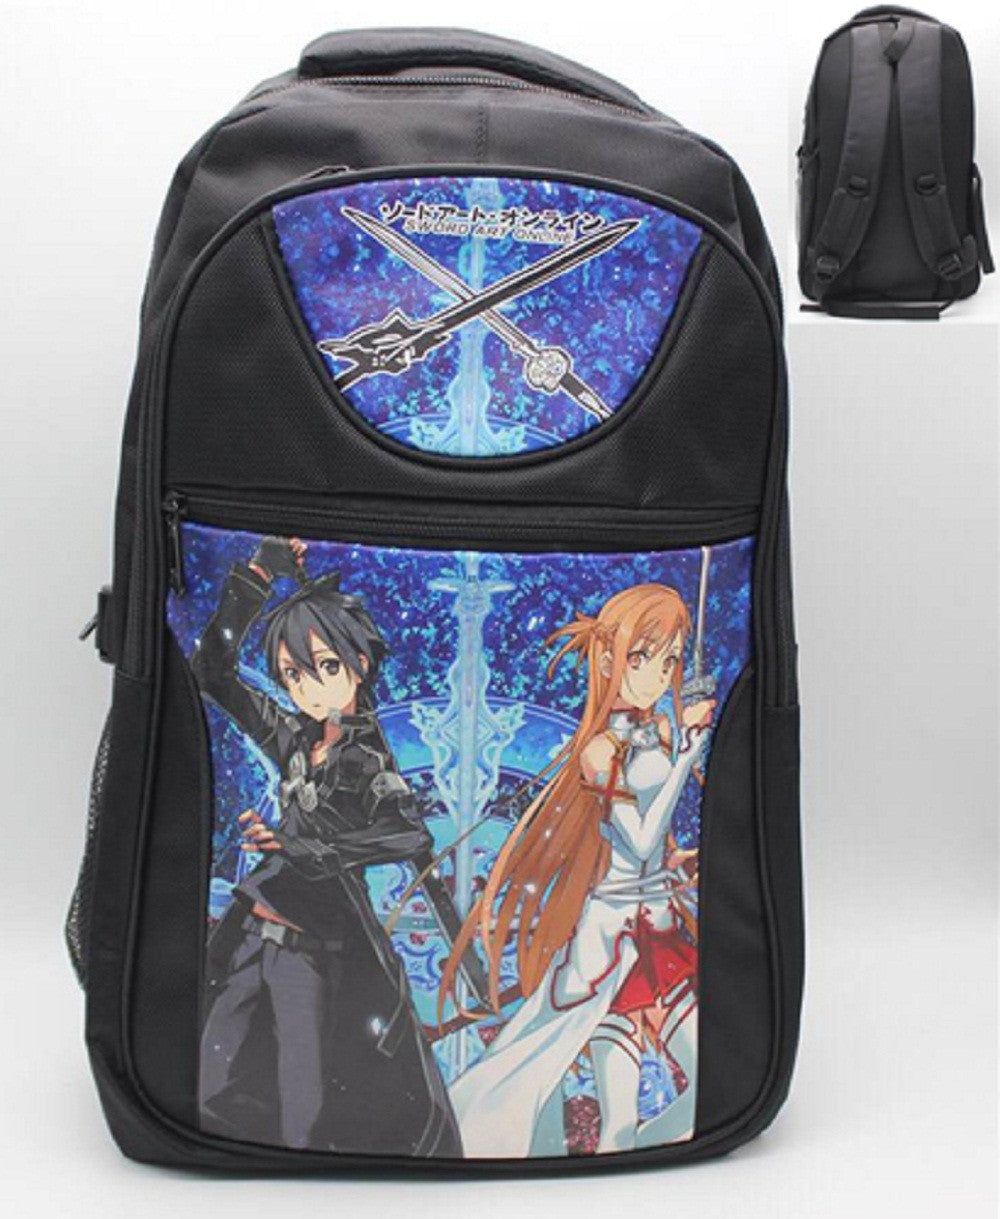 Sword Art Online Backpack Bag - Super Anime Store